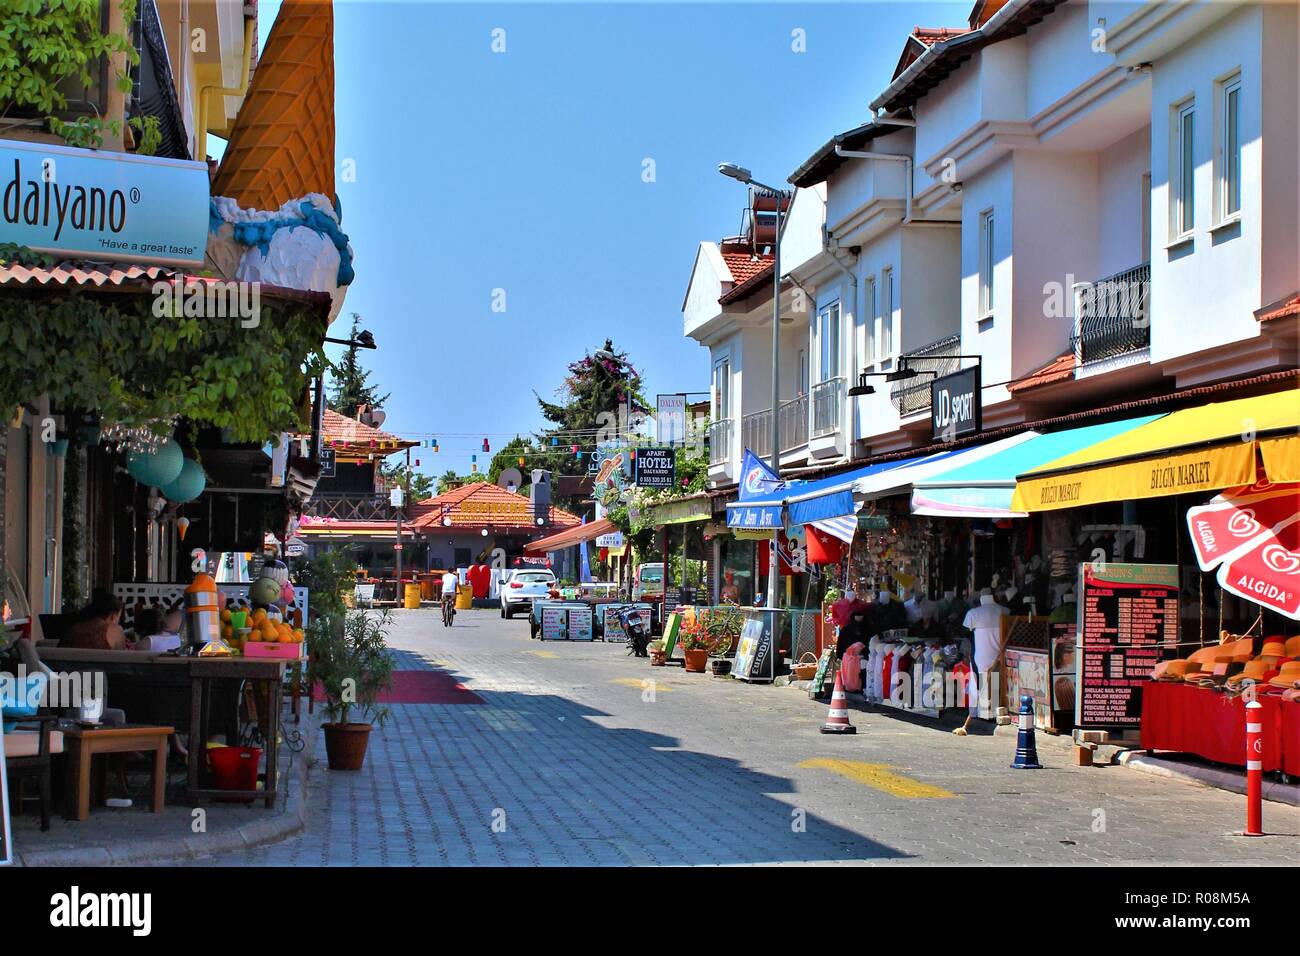 Dalyan, Turkey - July 12th 2018: View down a street in Dalyan town. Stock Photo